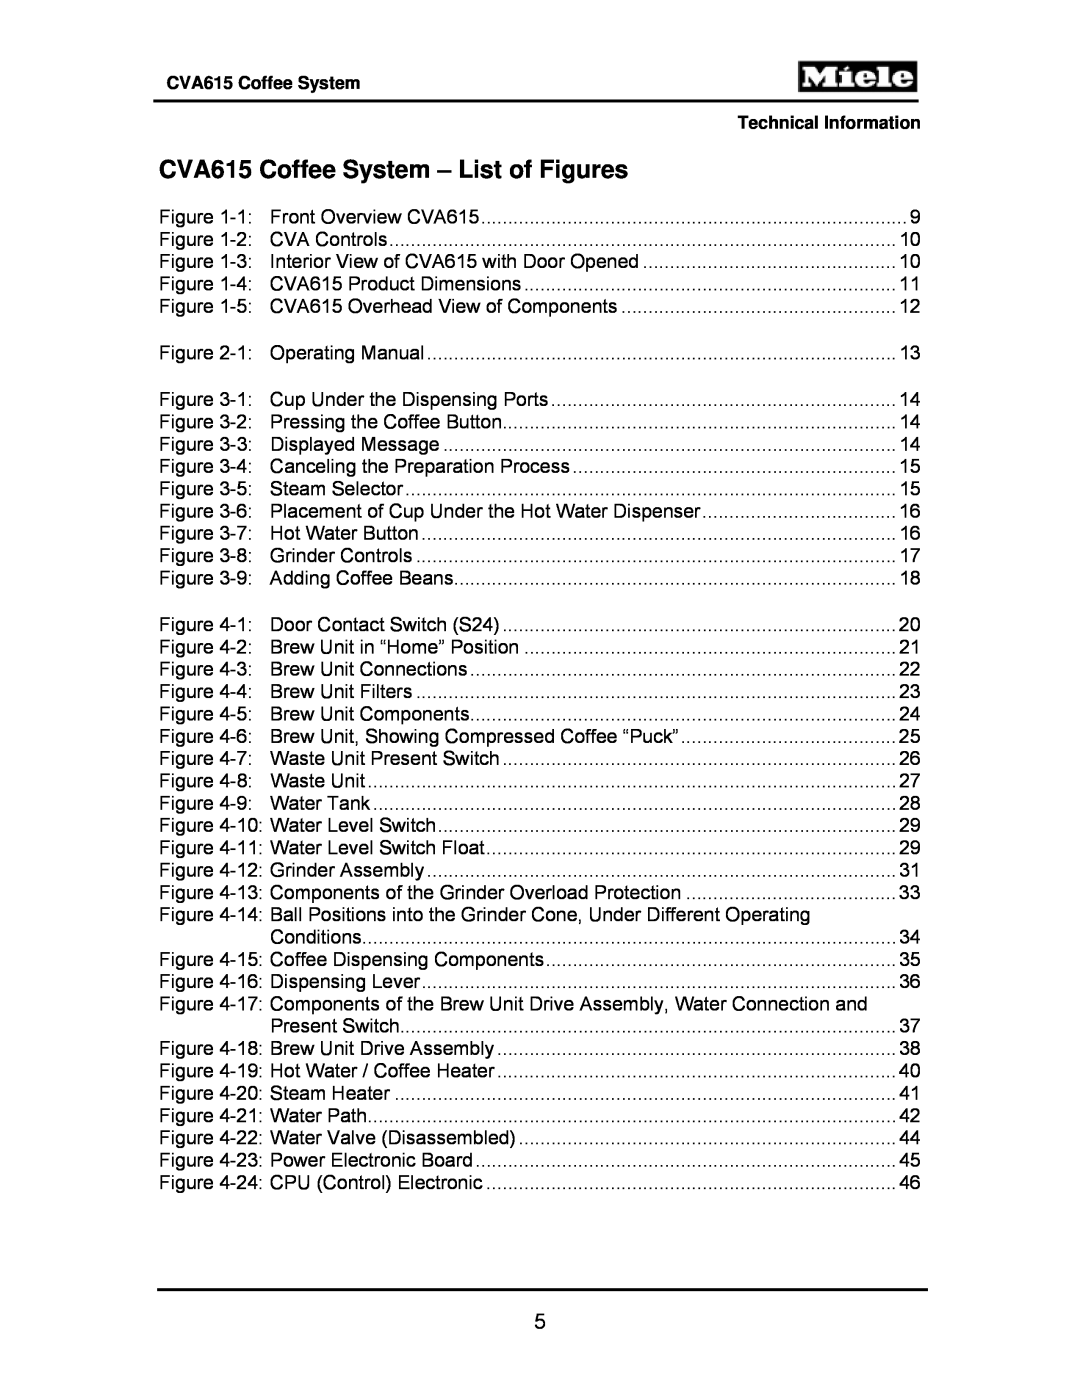 Miele manual CVA615 Coffee System – List of Figures 